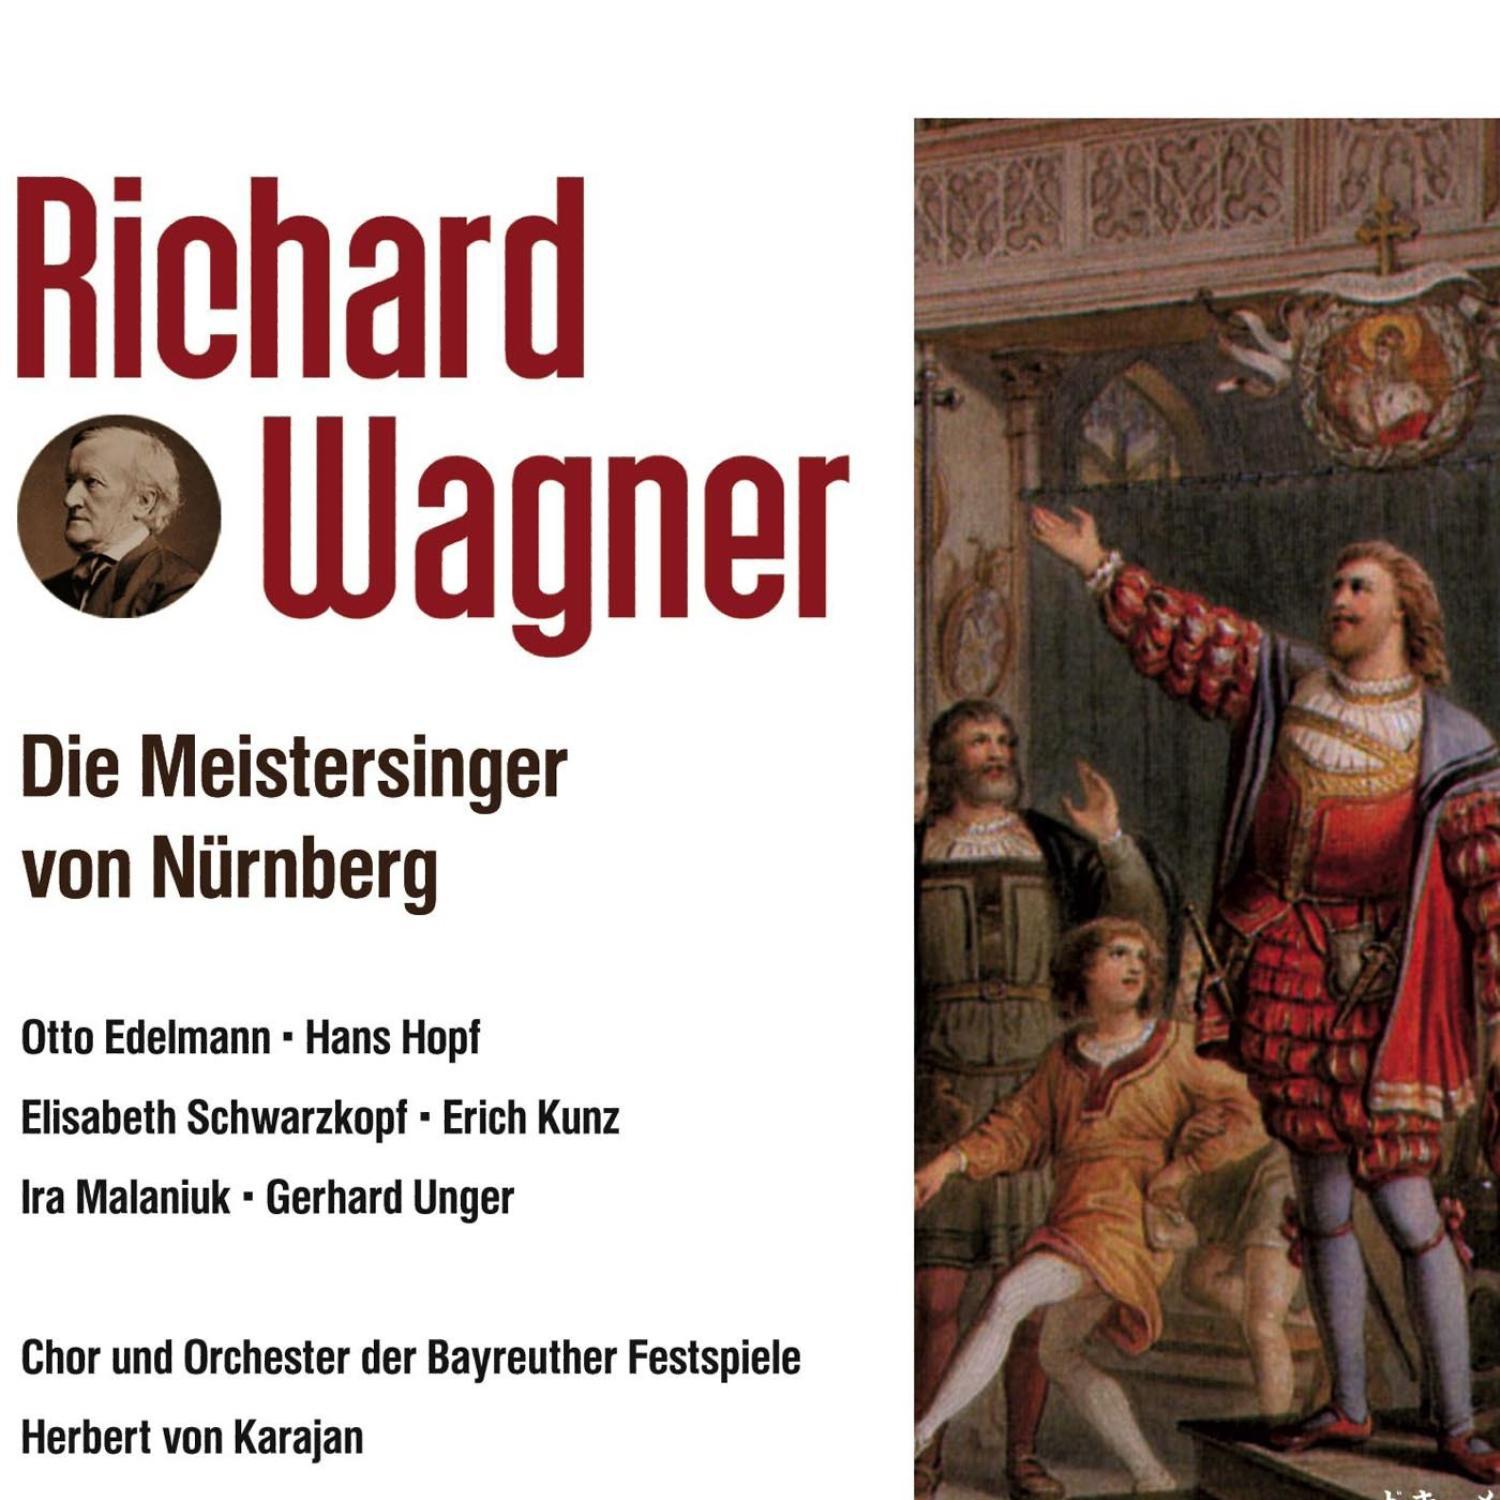 Die Meistersinger von Nürnberg专辑